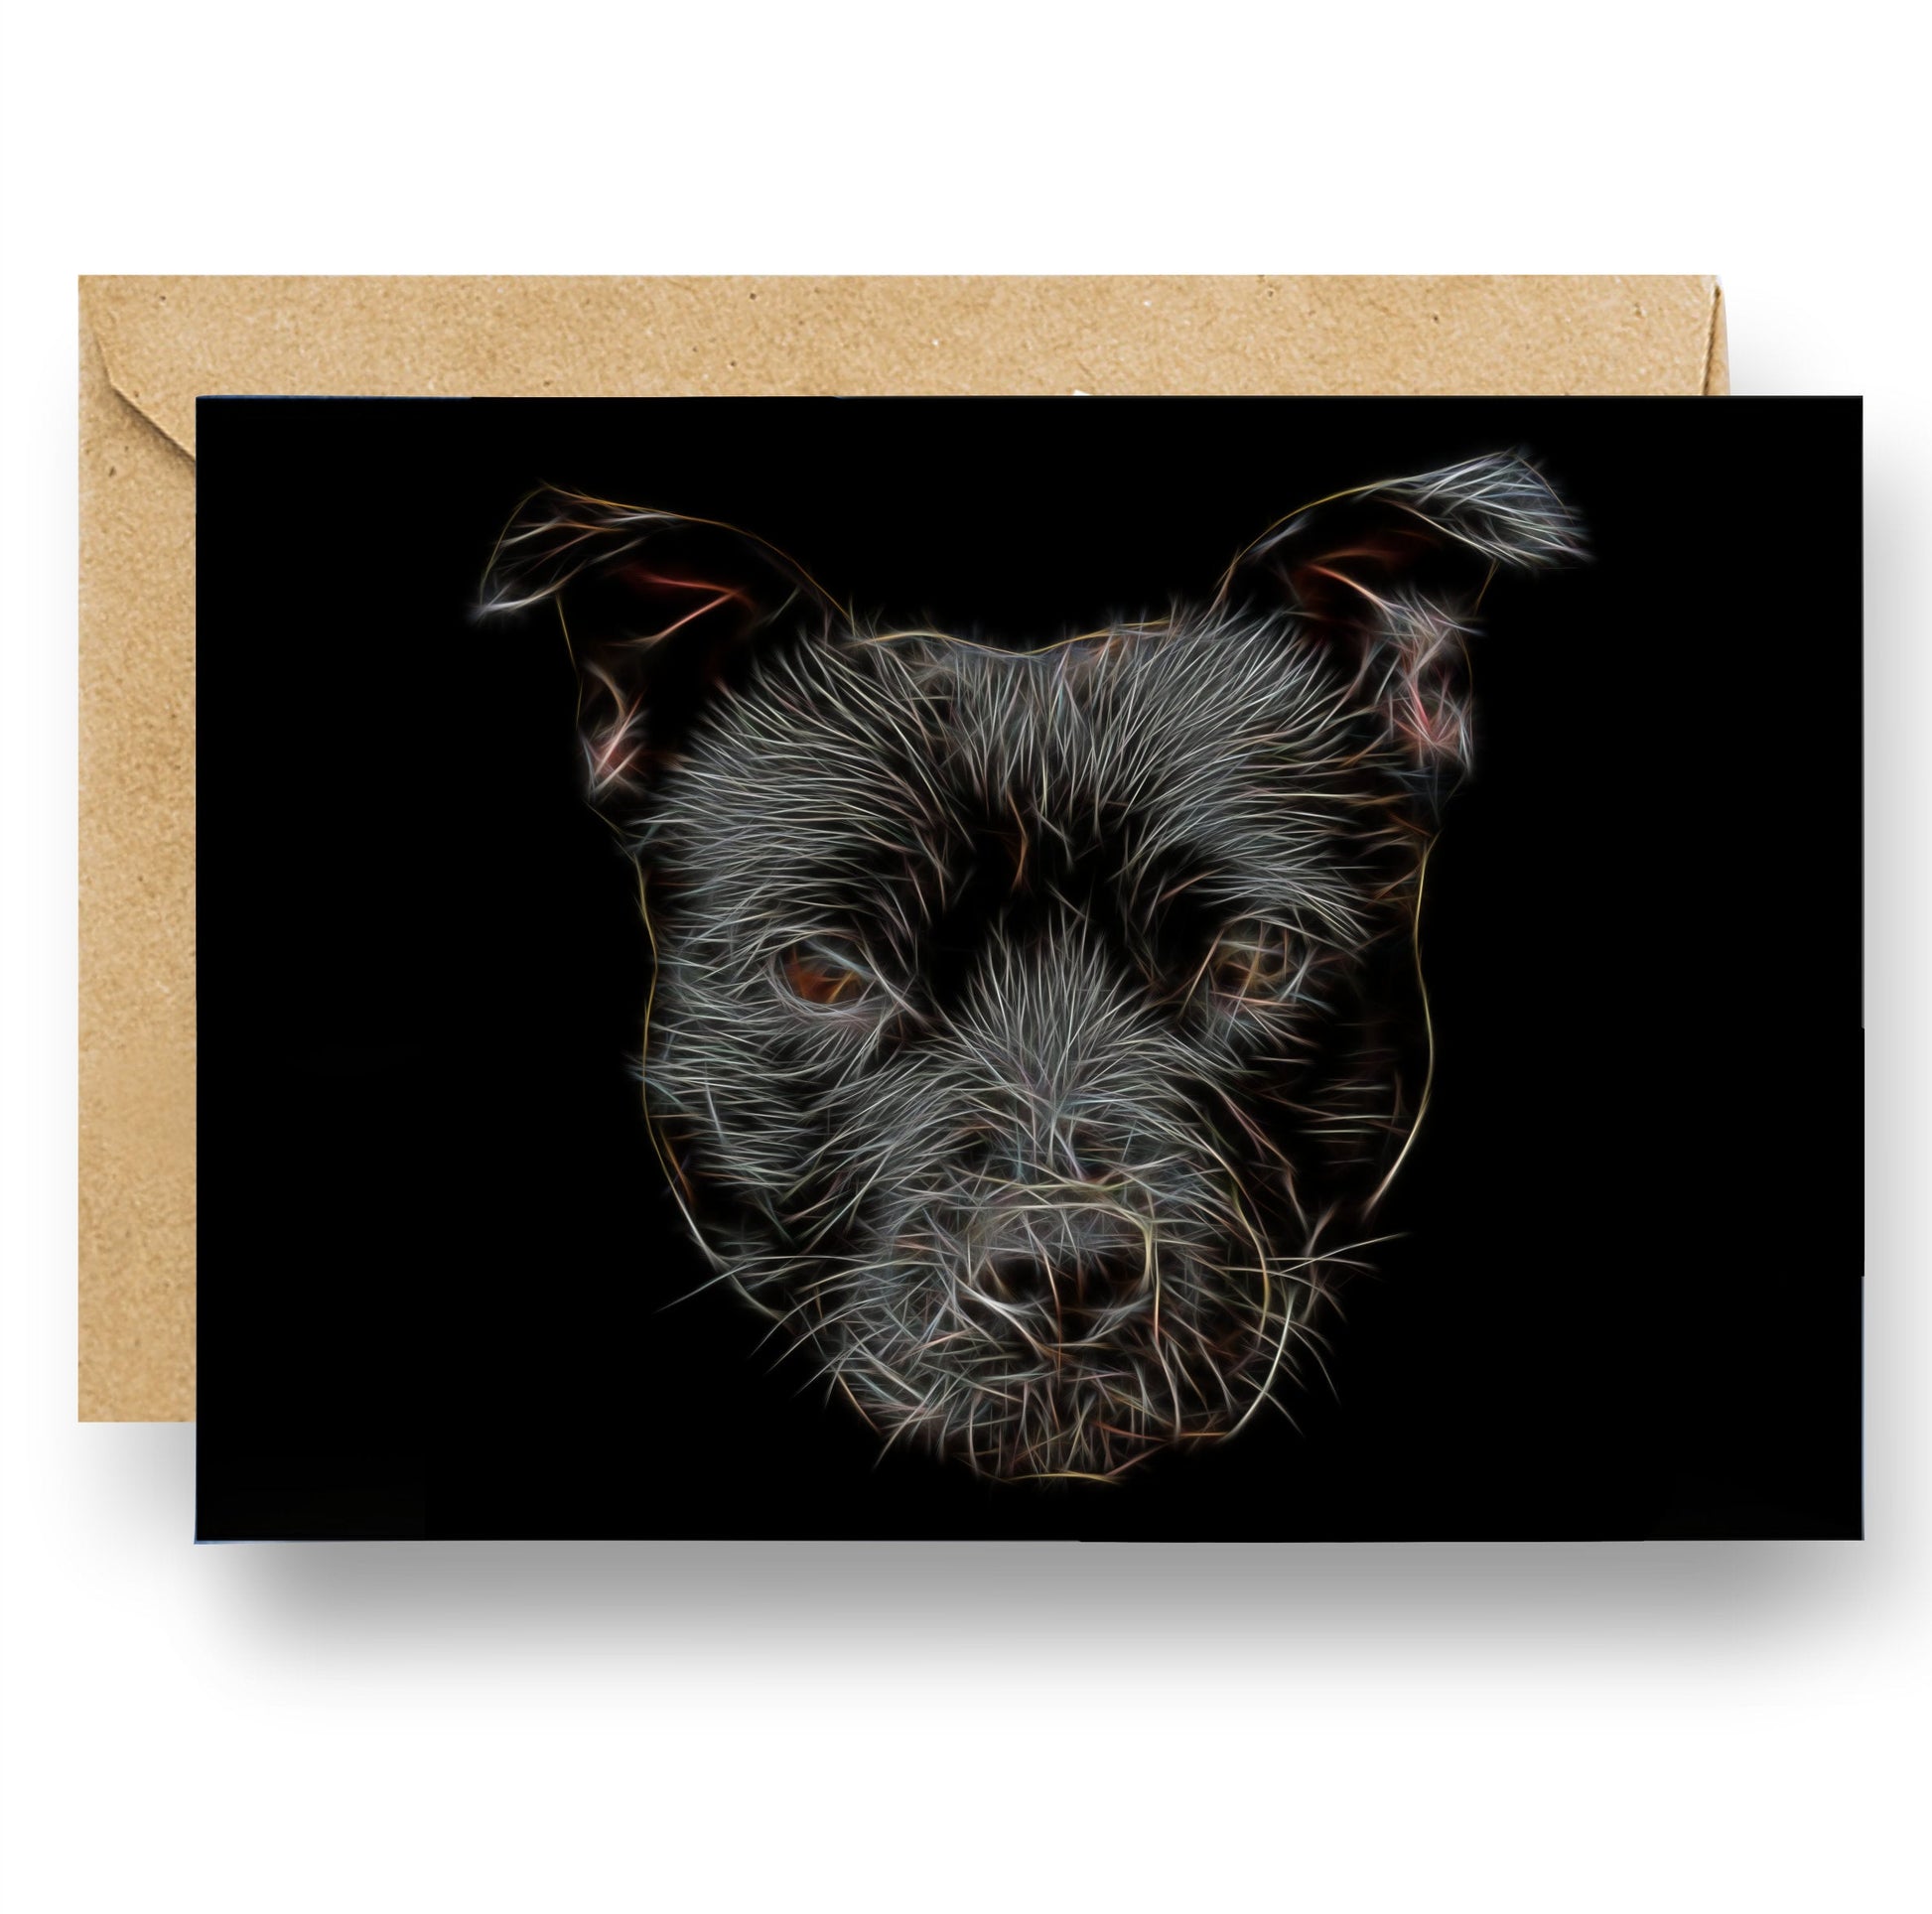 Black Staffordshire Bull Terrier Blank Birthday Greeting Card with Stunning Fractal Art Design. Black Staffy Card